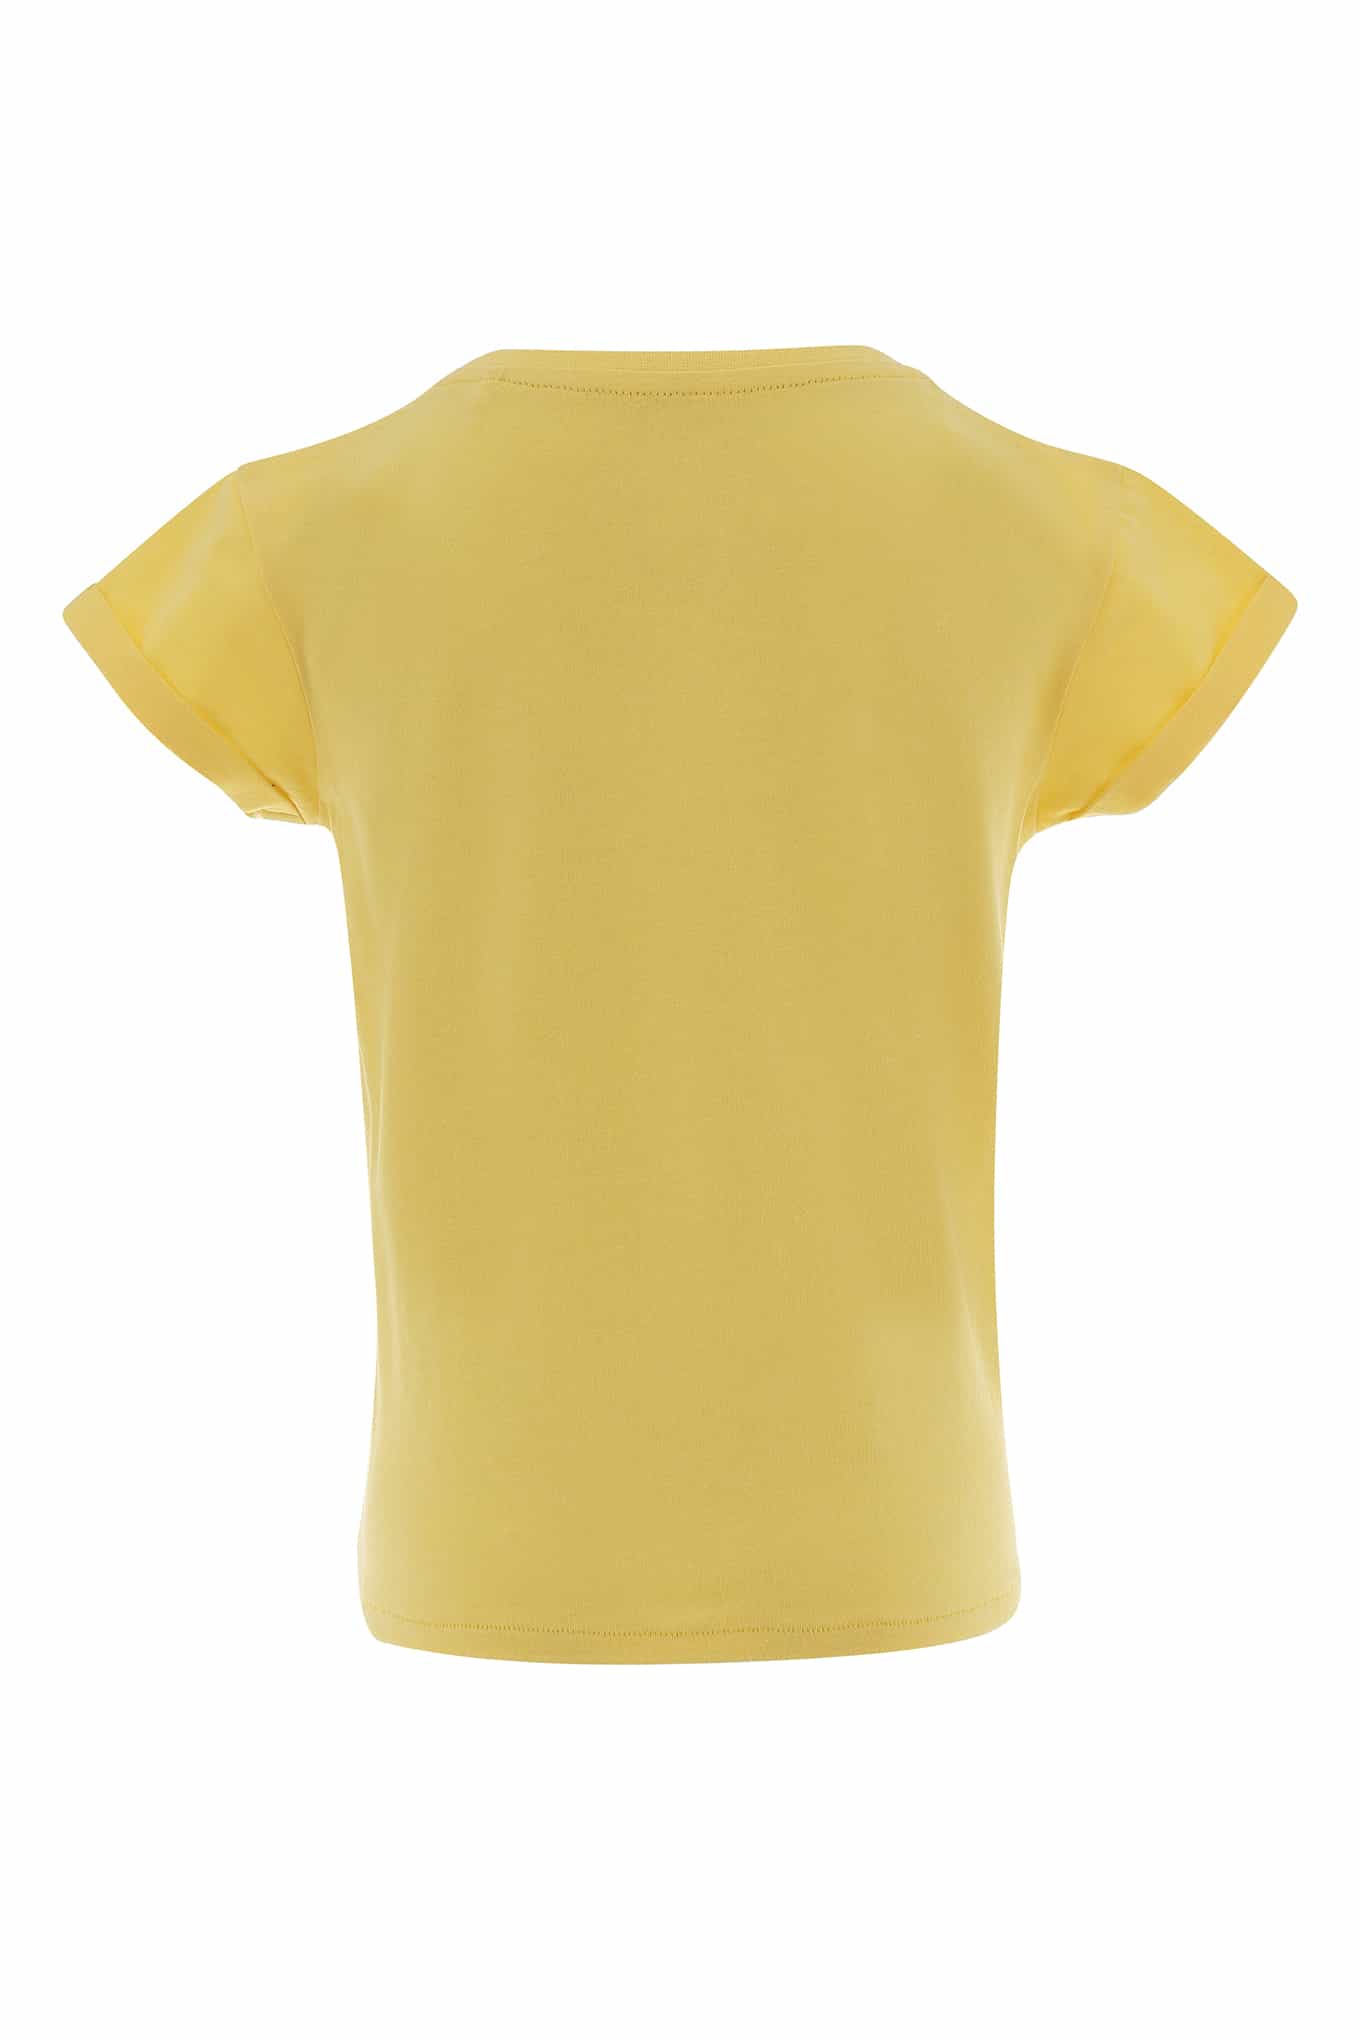 T-Shirt Amarelo Claro Sport Rapariga